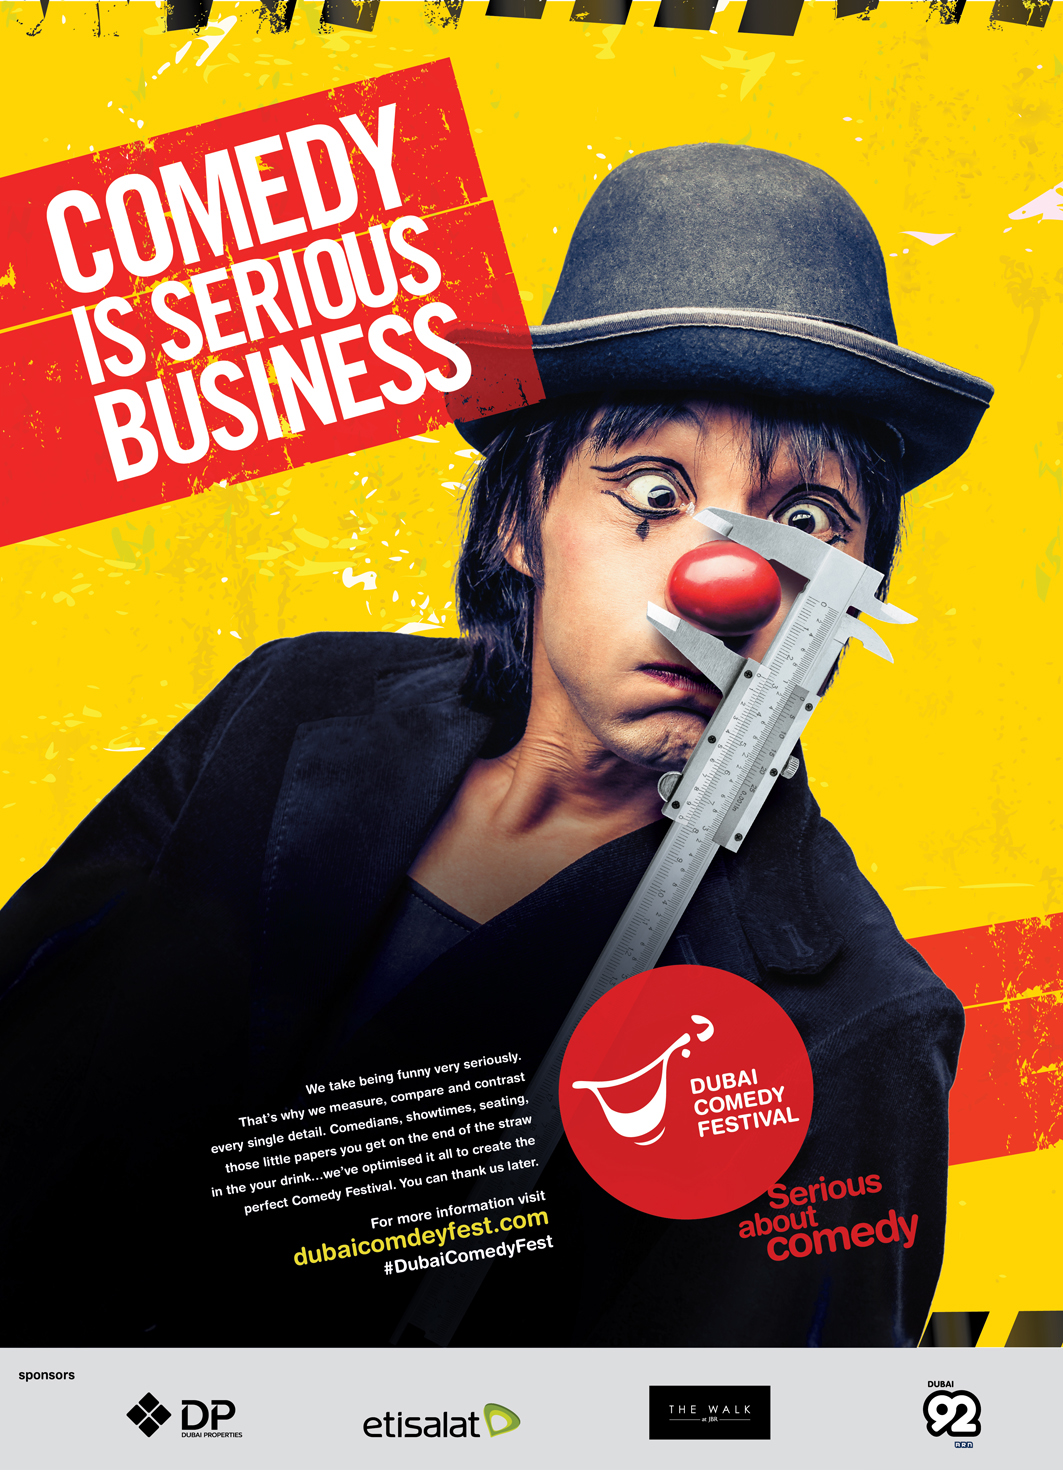 Dubai Comedy Festival 2015 yr comedy  dubai clown Taking Comedy Seriously